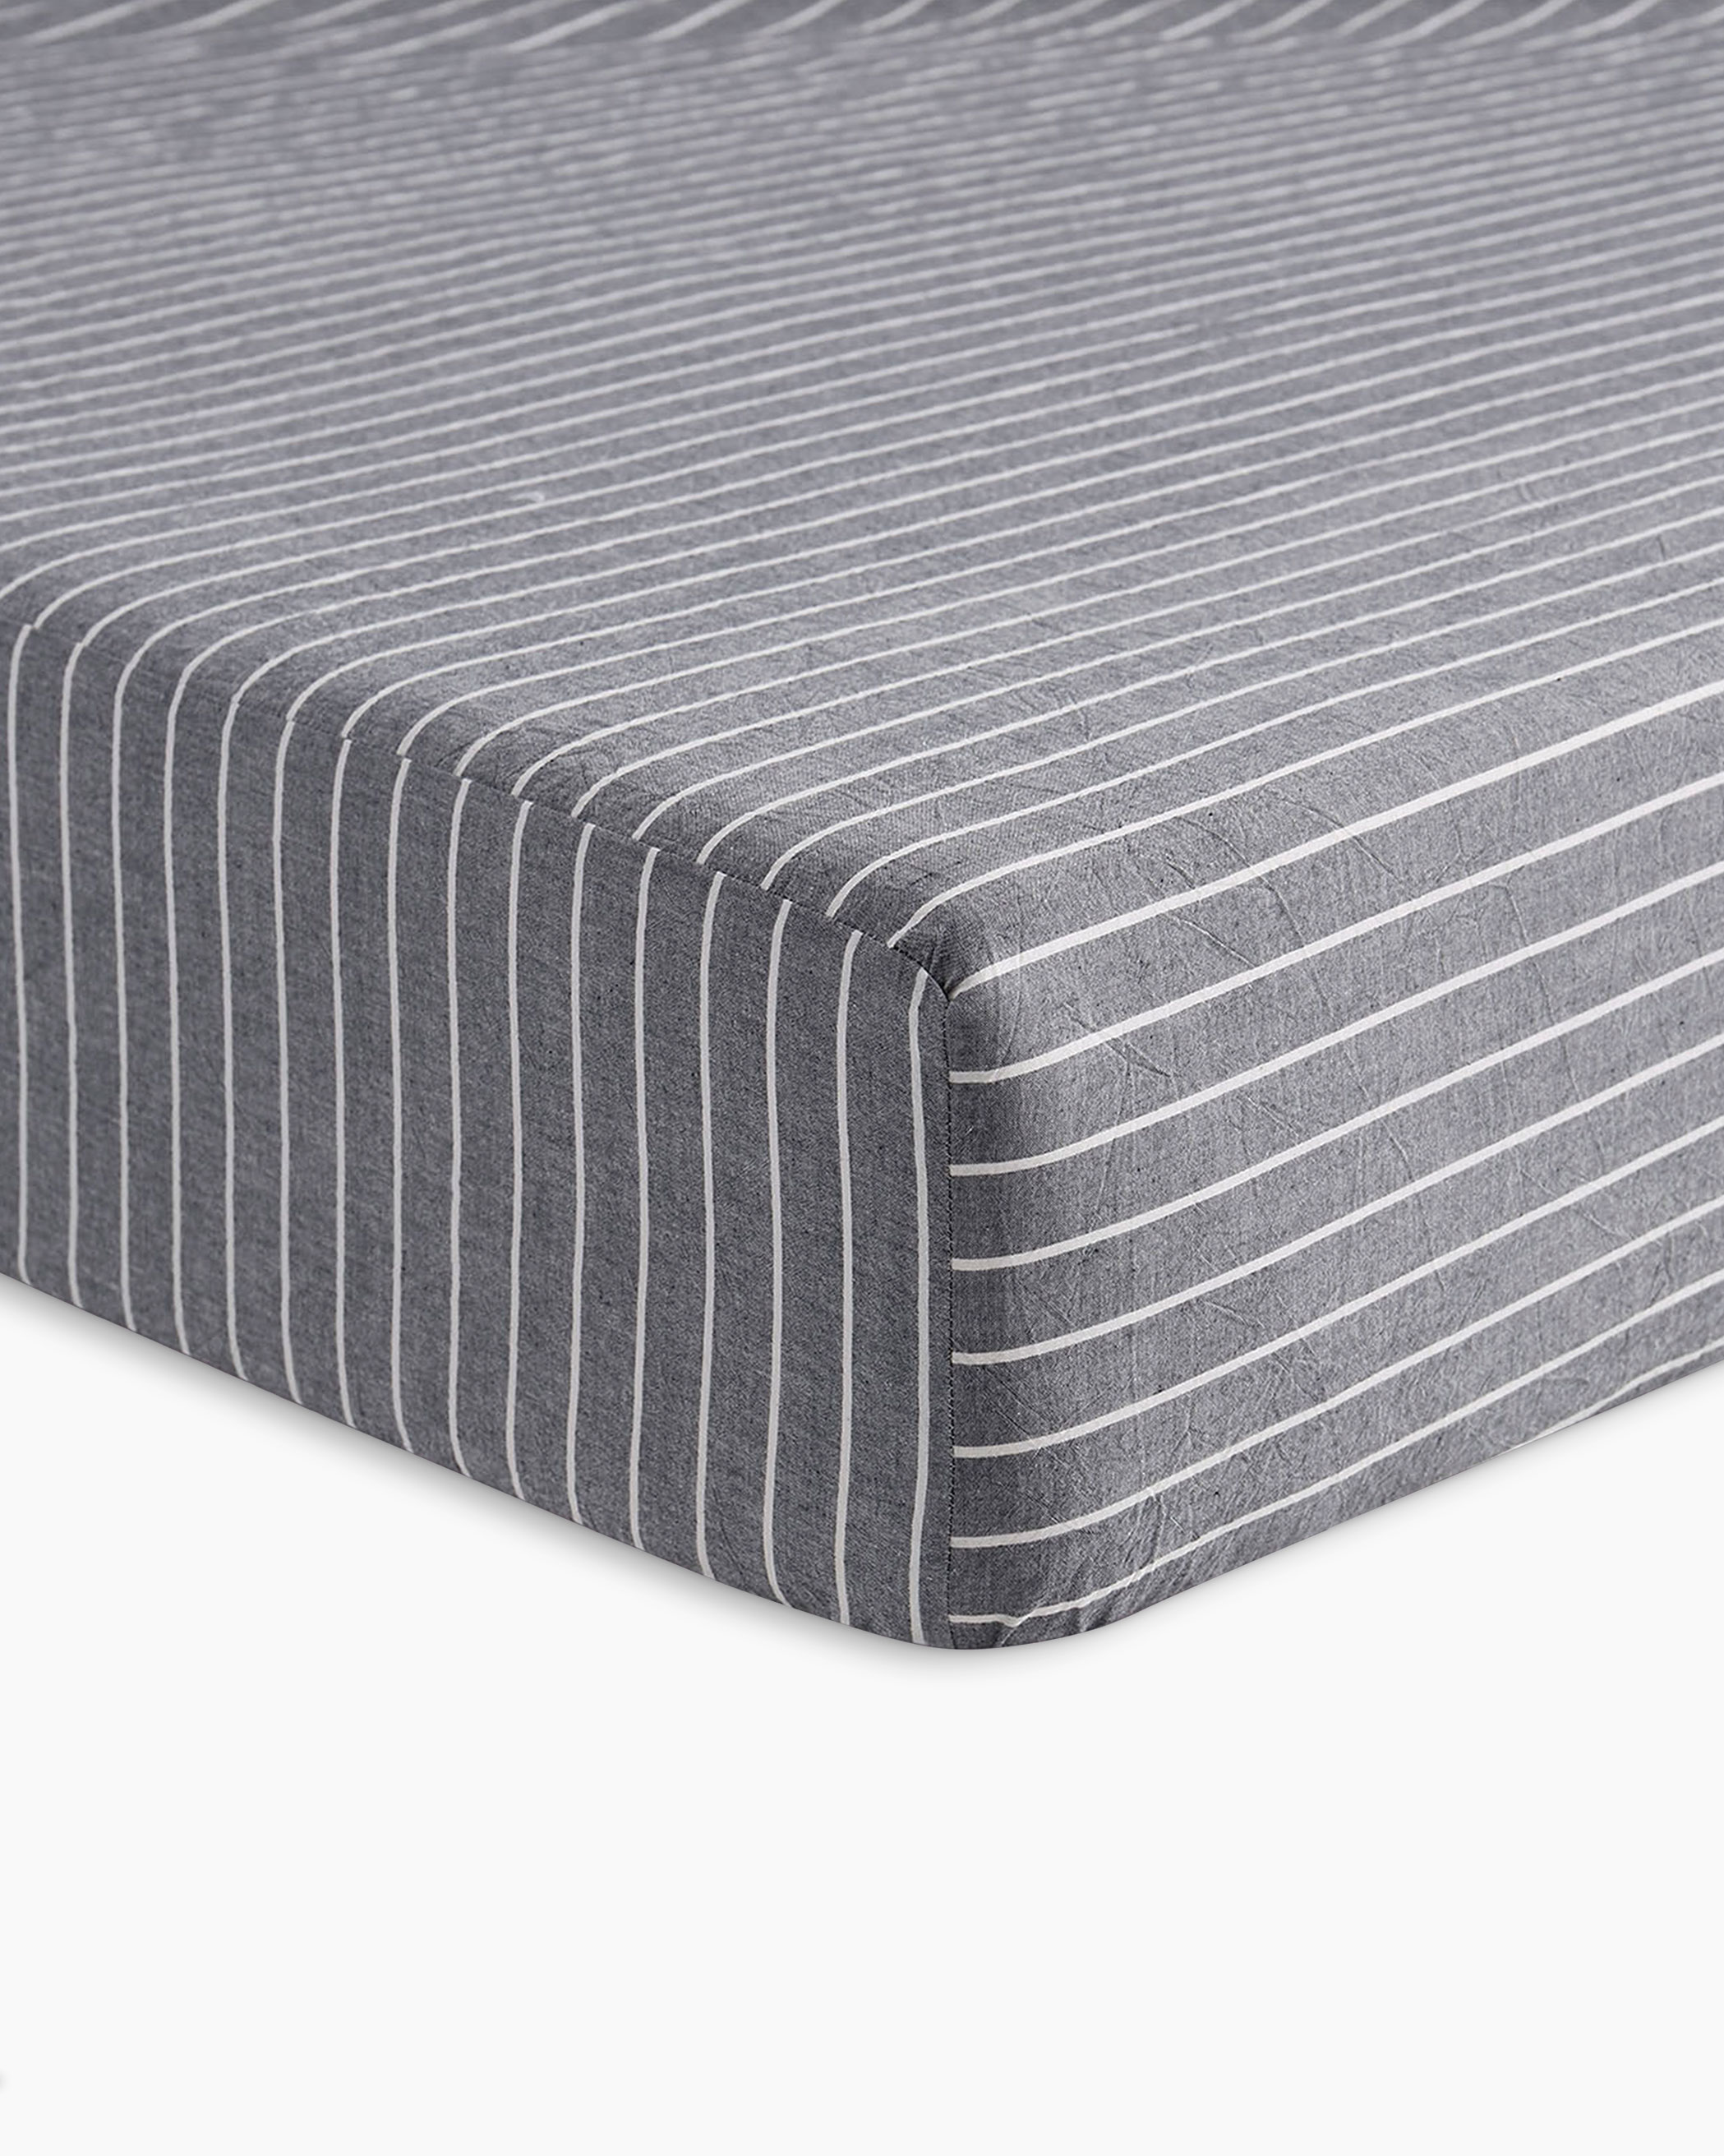 Gray Striped Washed Cotton Sheet Set